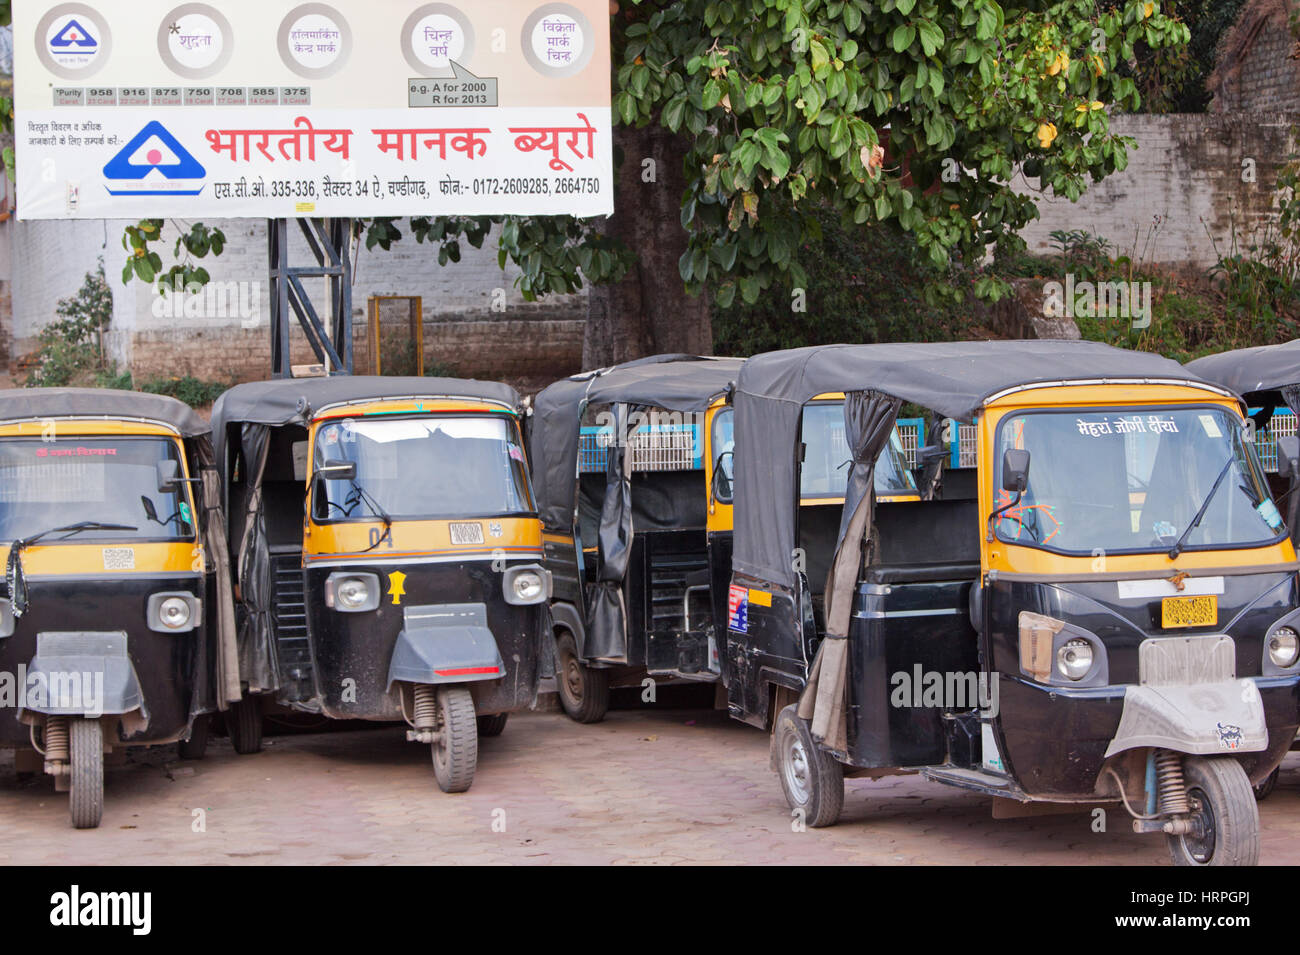 Fleet of auto rickshaws, commonly known as tuktuks, awaiting passengers outside the railway station at Kalka, India Stock Photo